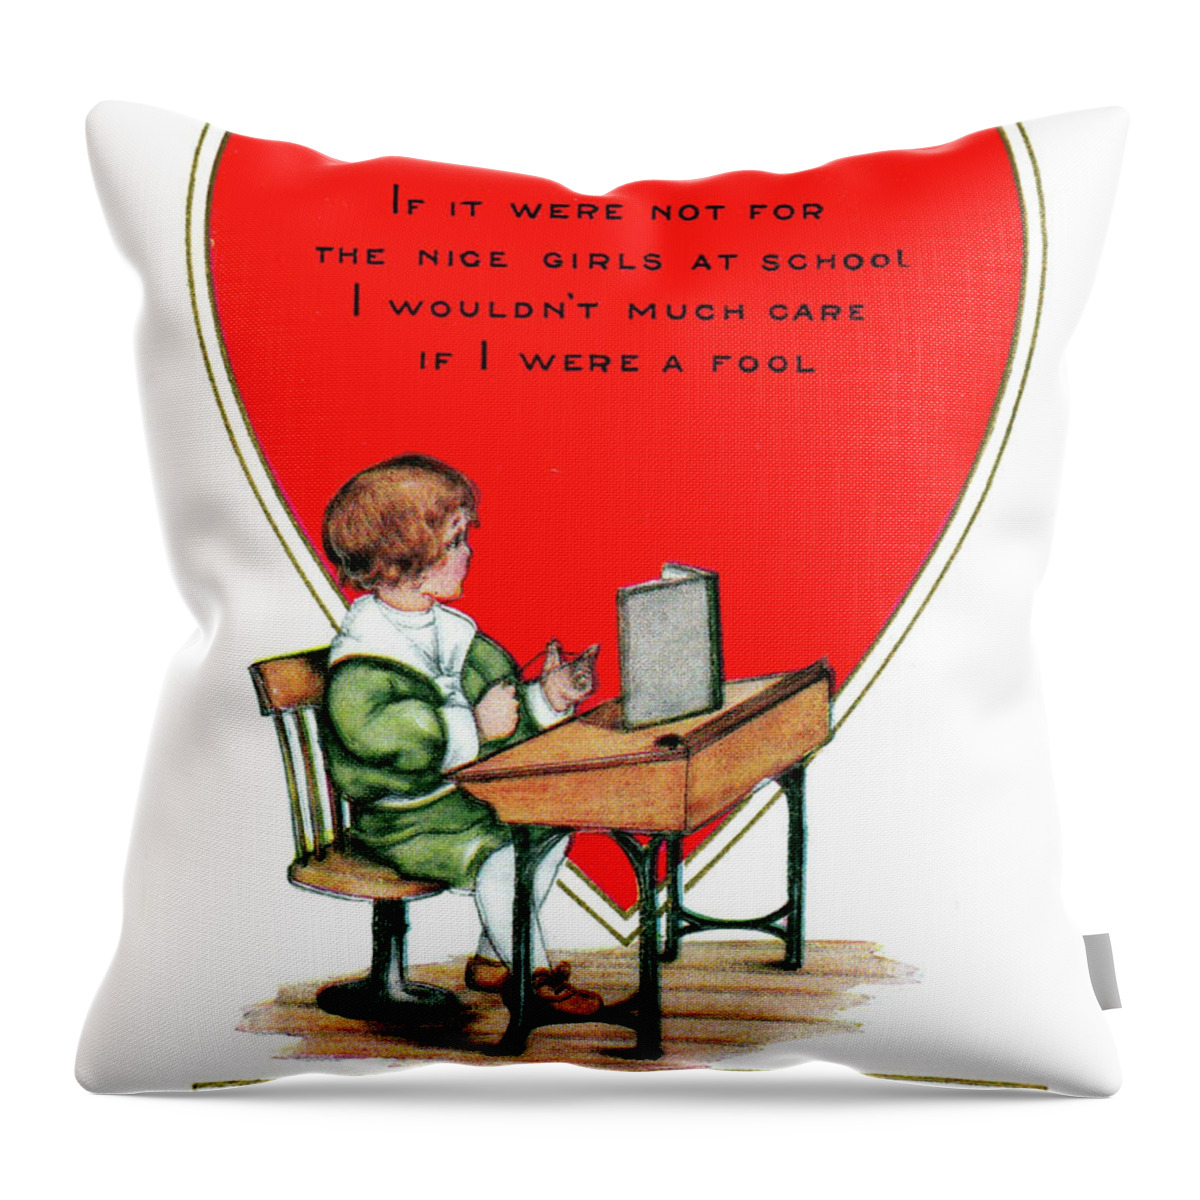 School Throw Pillow featuring the digital art School Love by Long Shot